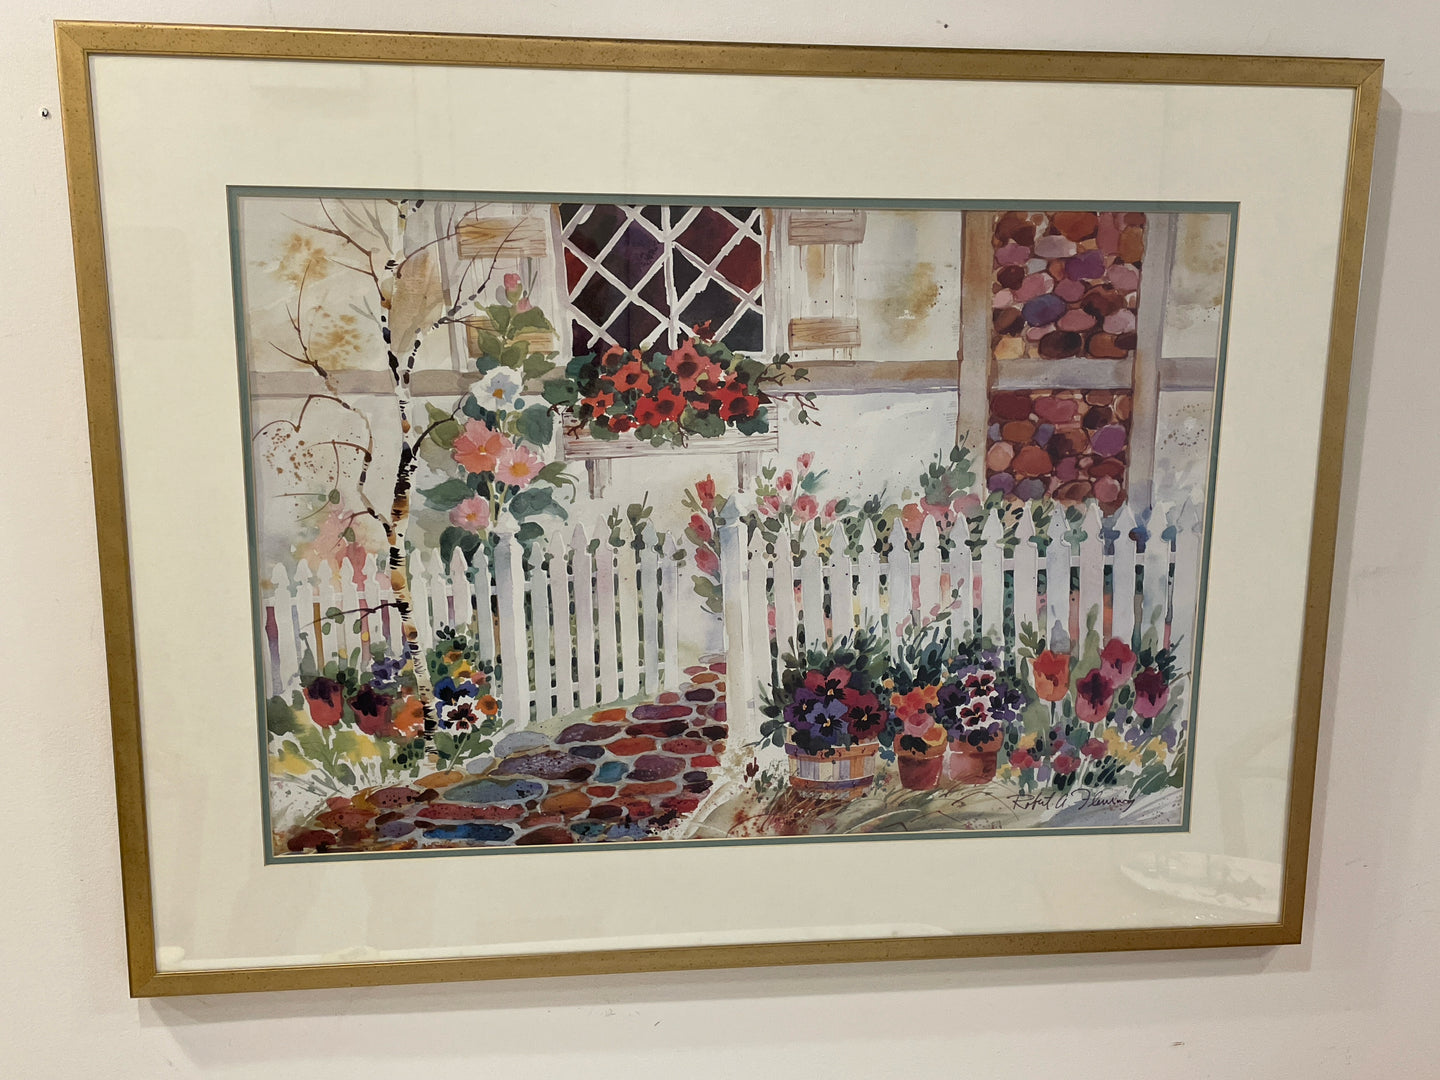 Framed Print of Garden by Robert Fleming, signed